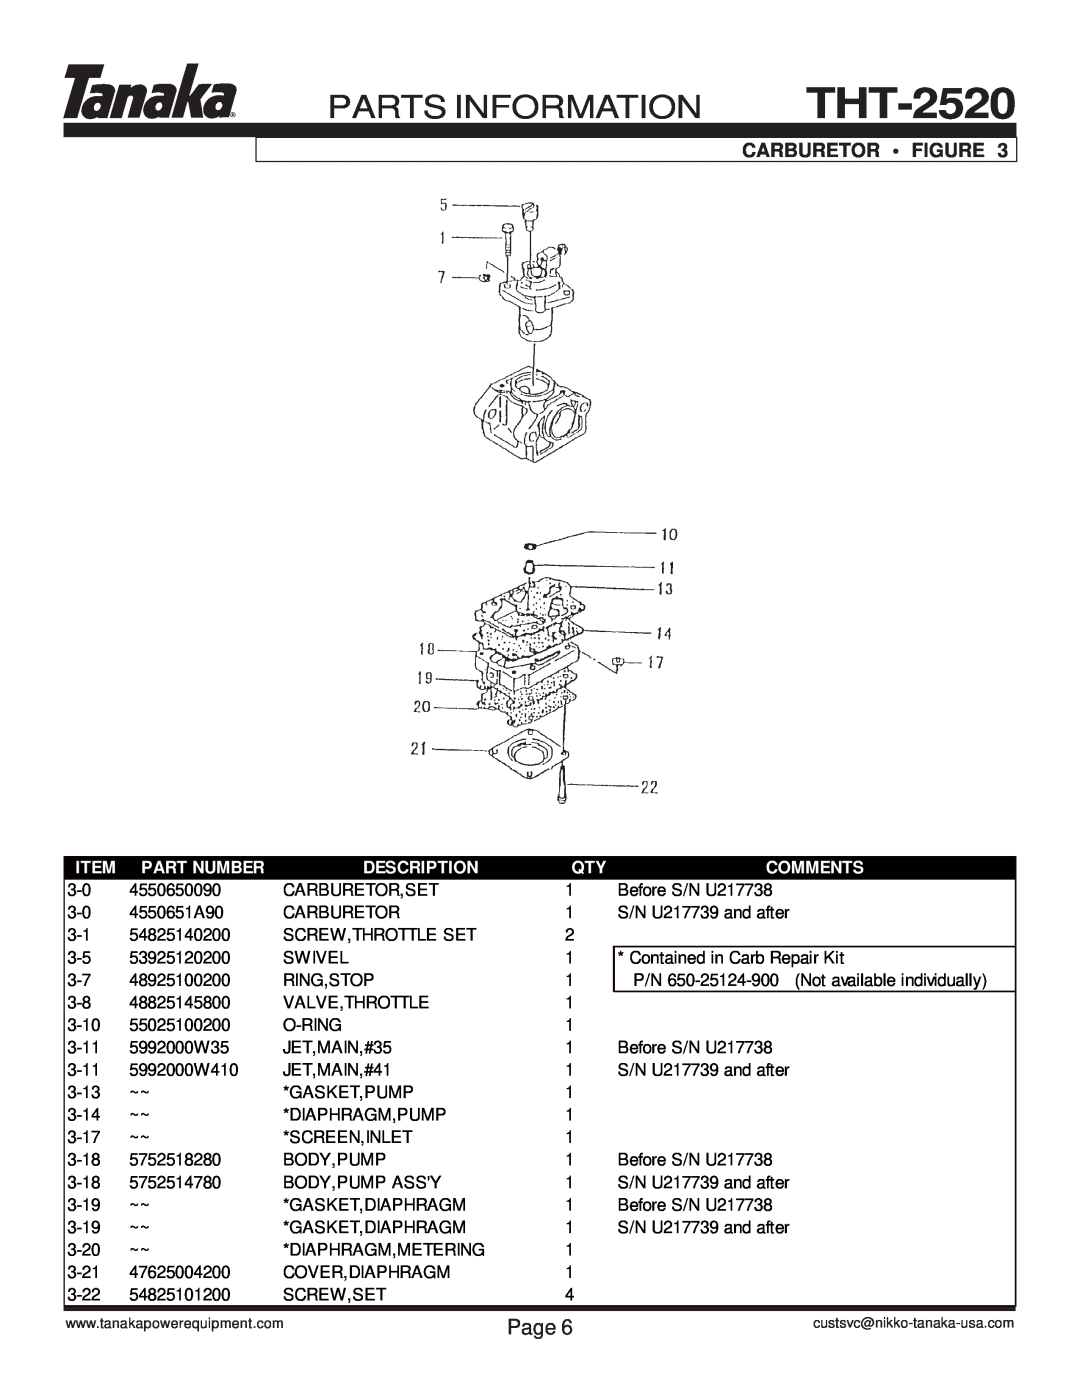 Tanaka THT-2520 manual Parts Information, Carburetor Figure, Page, Part Number, Description, Comments 